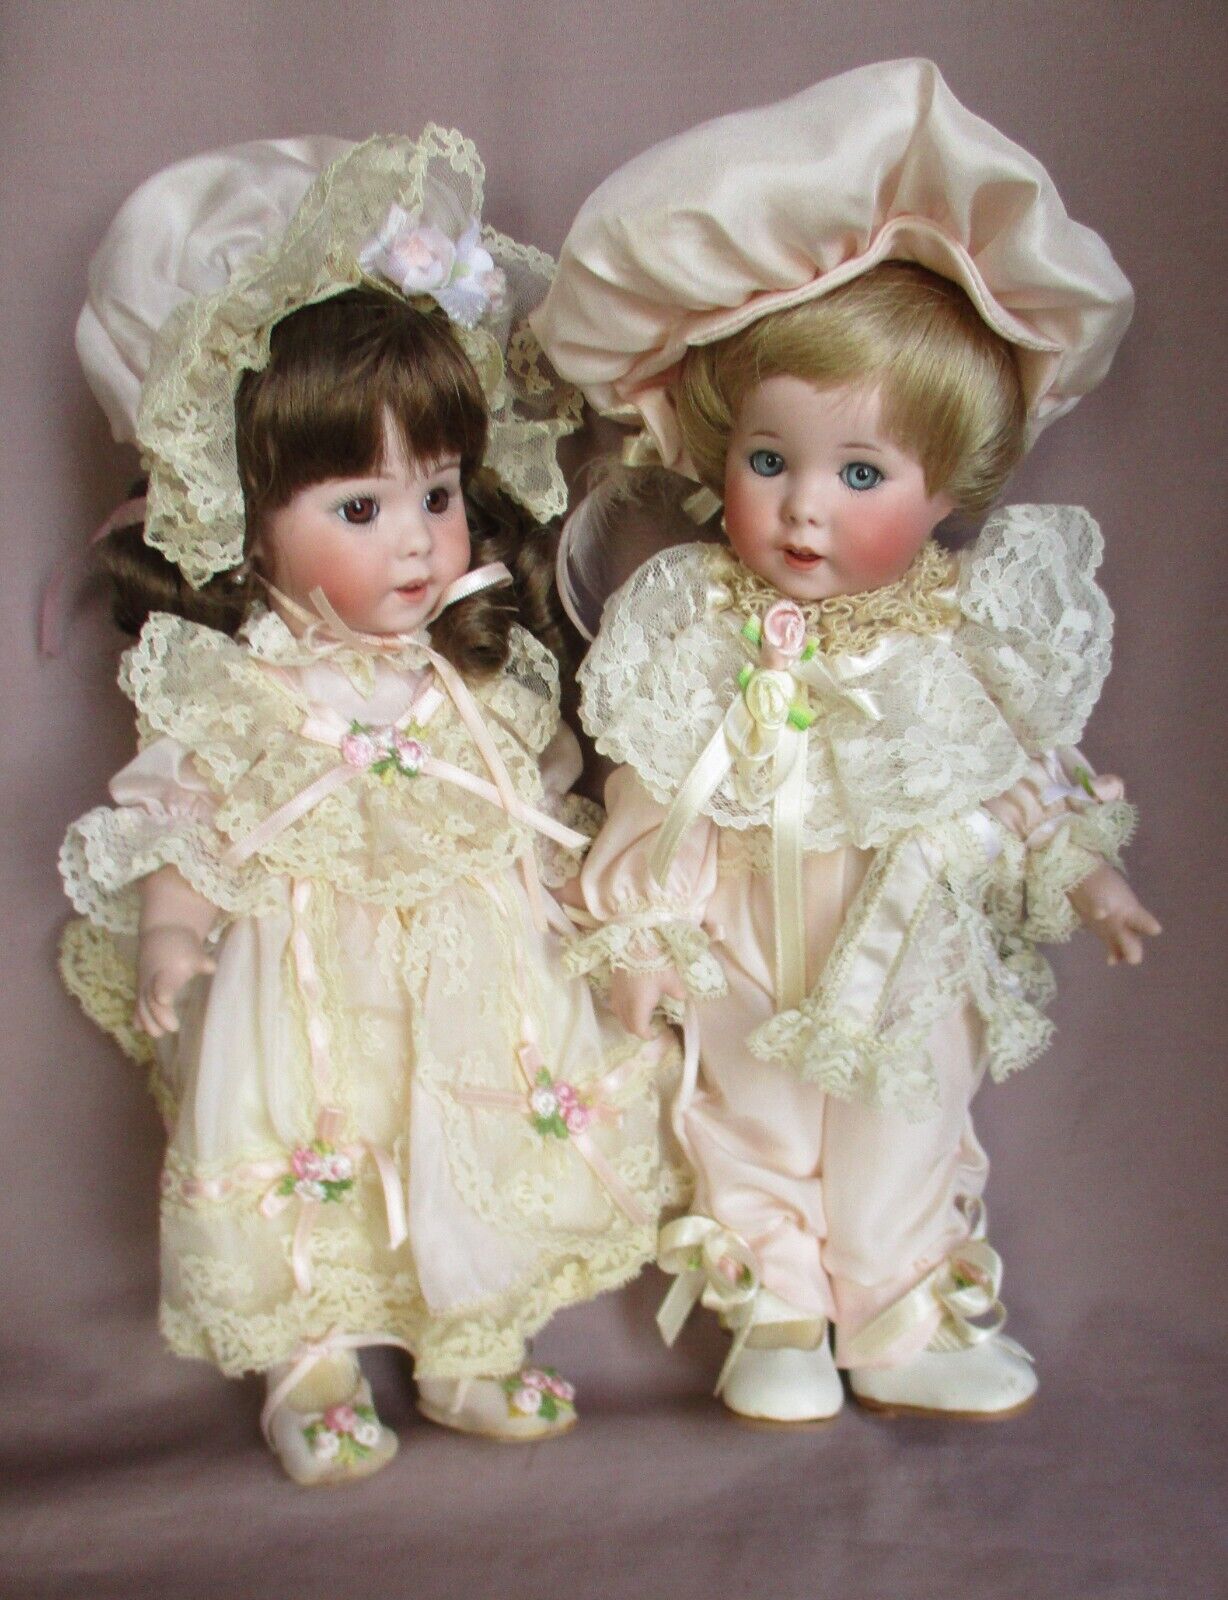 Adorable Pair Vintage 11” Porcelain Artist Repro French SFBJ 247 Dolls Dressed